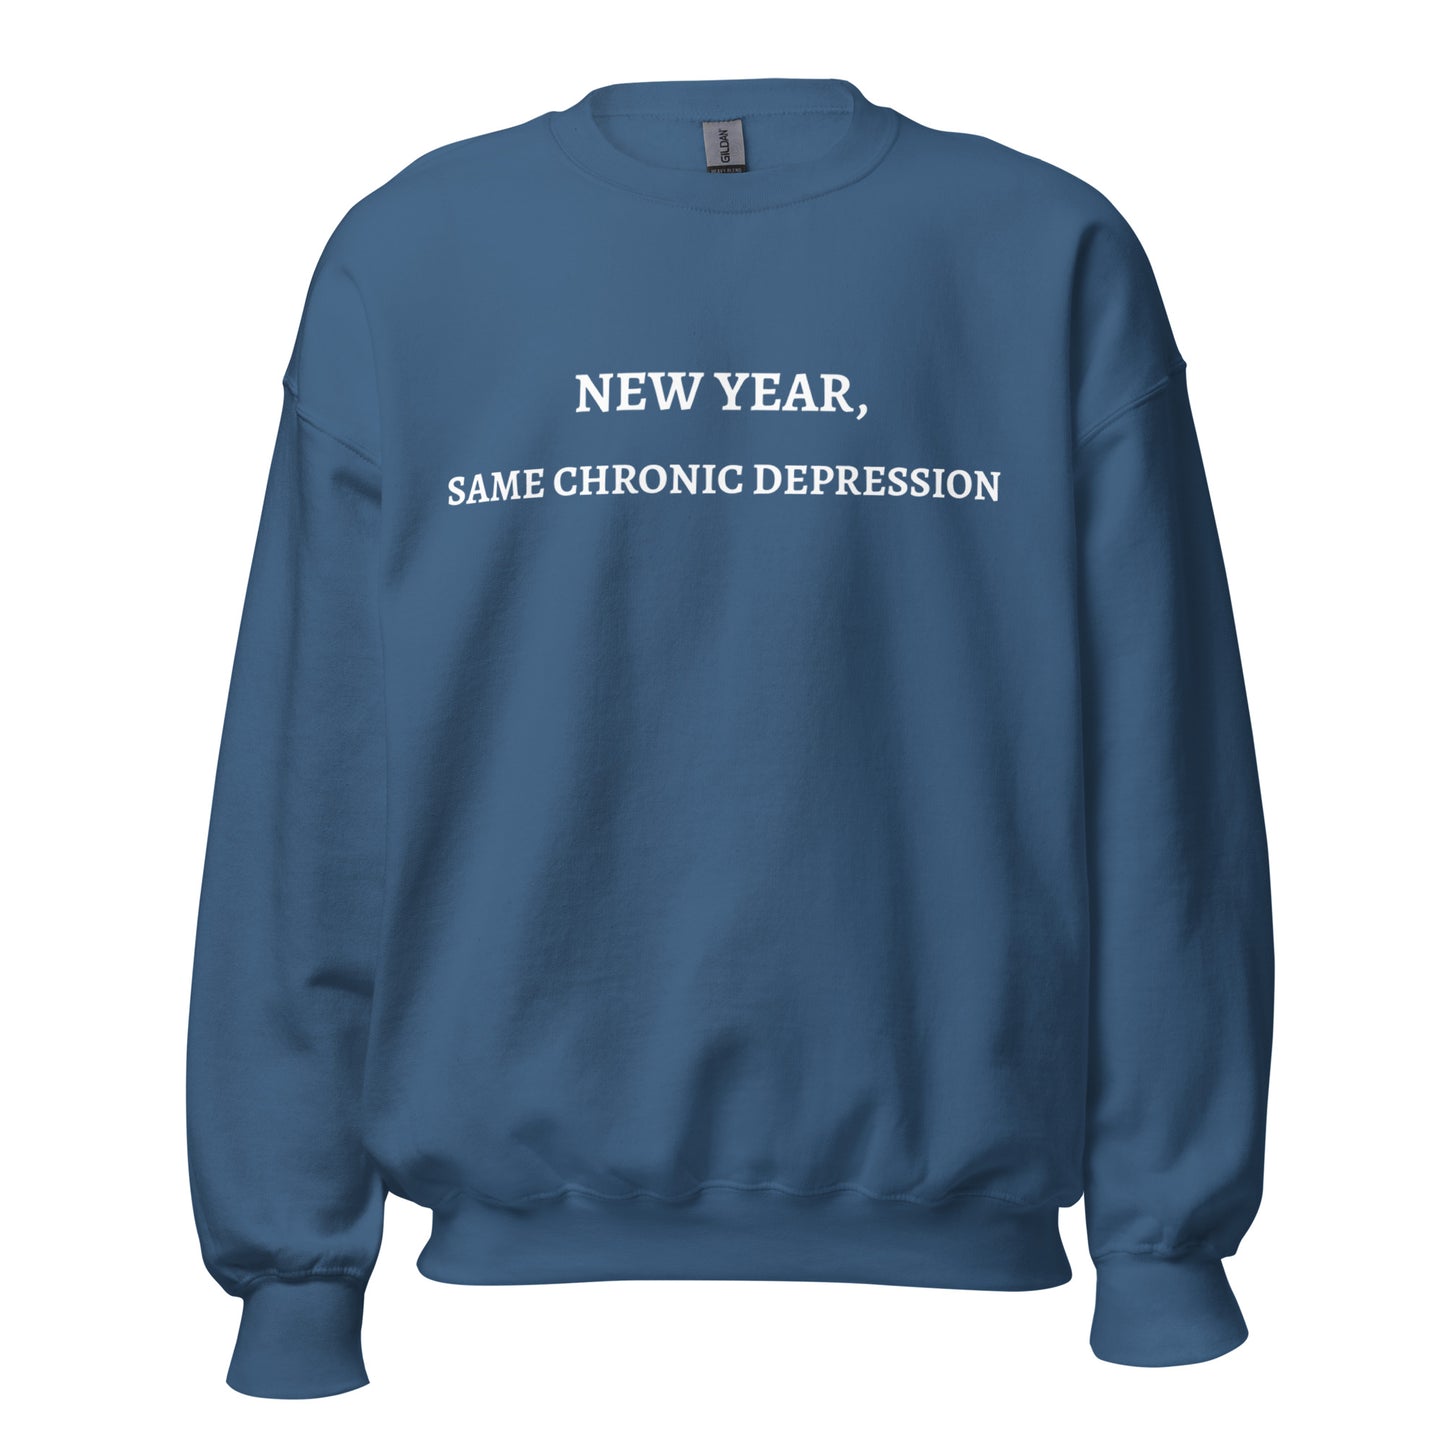 NEW YEAR, SAME CHRONIC DEPRESSION